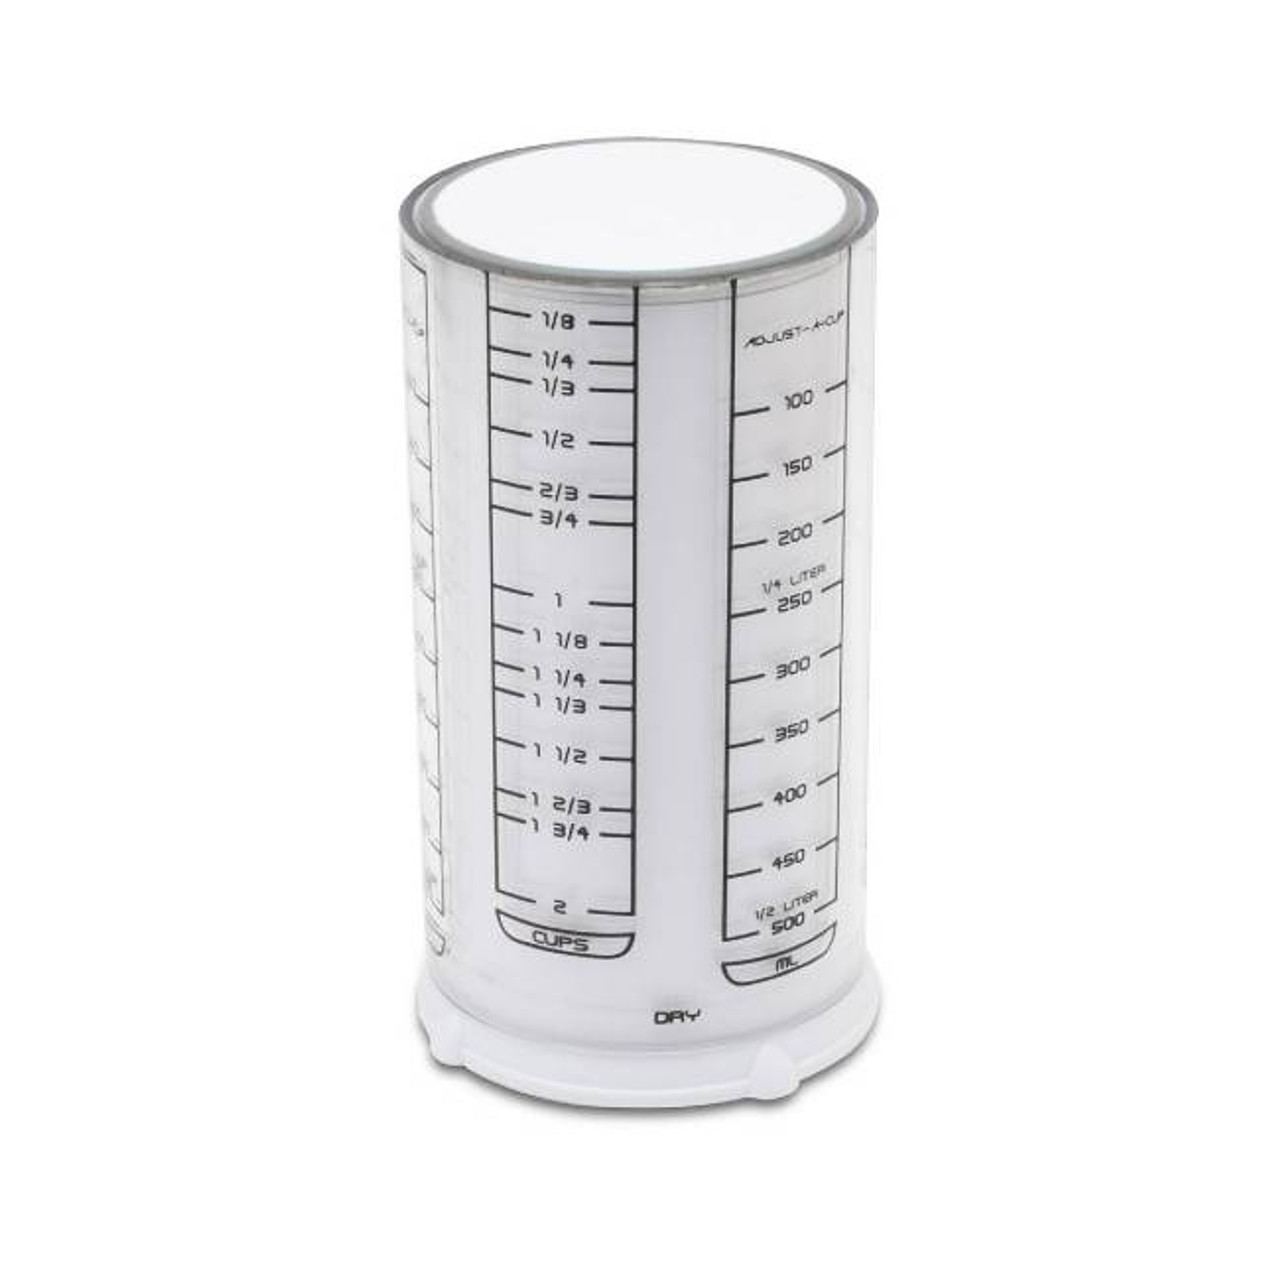 Norpro 2-Cup Plastic Measuring Cup